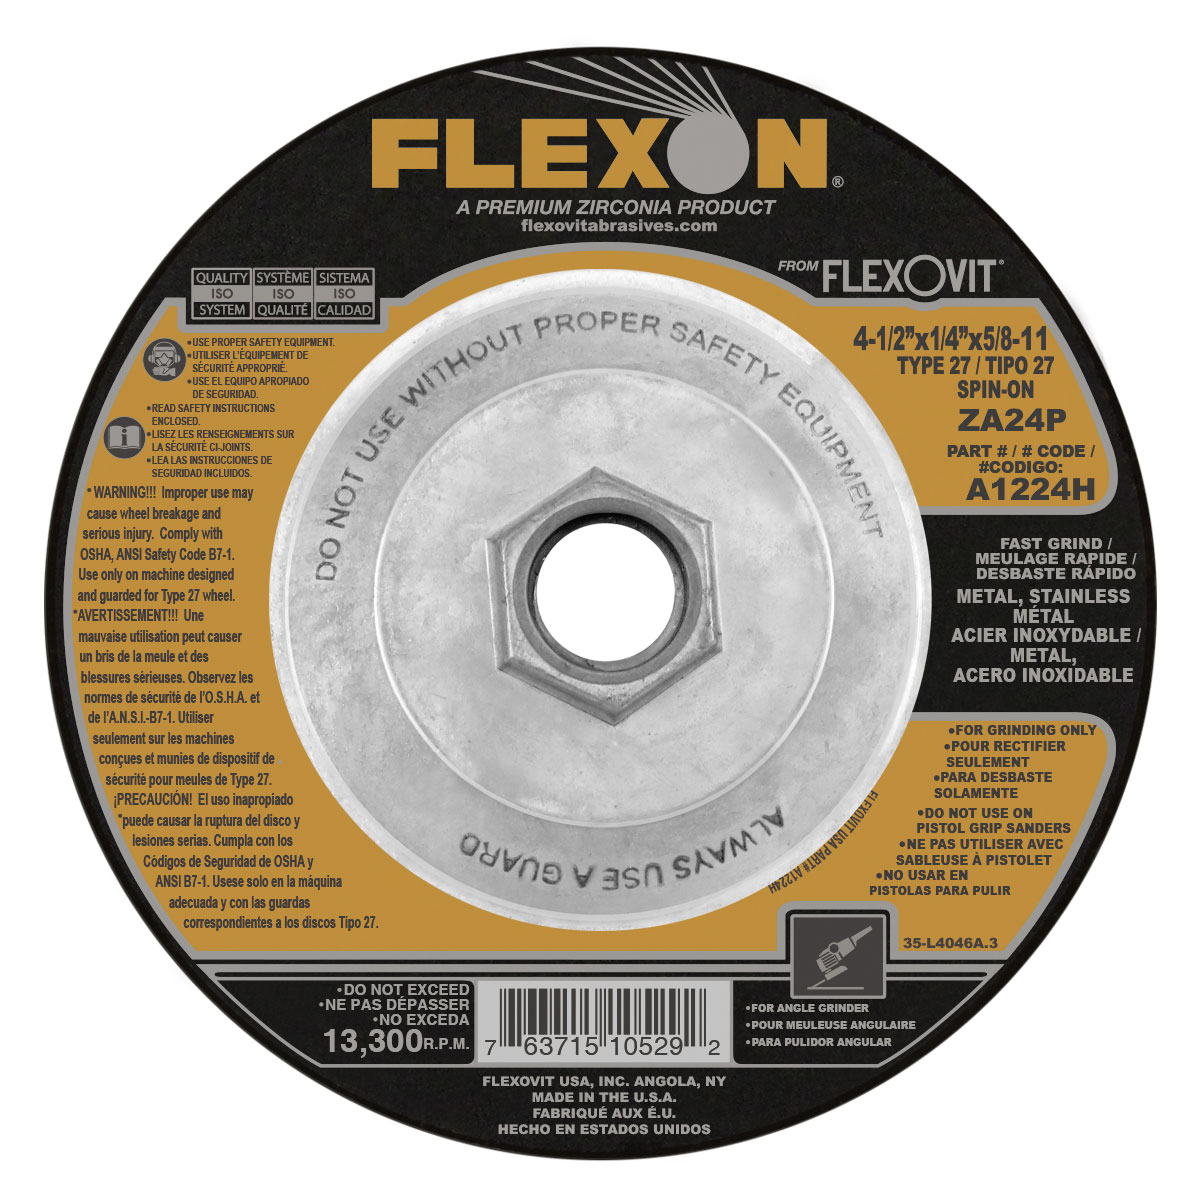 Item # A1224H, Type 27 Grinding Wheel On Flexovit USA,